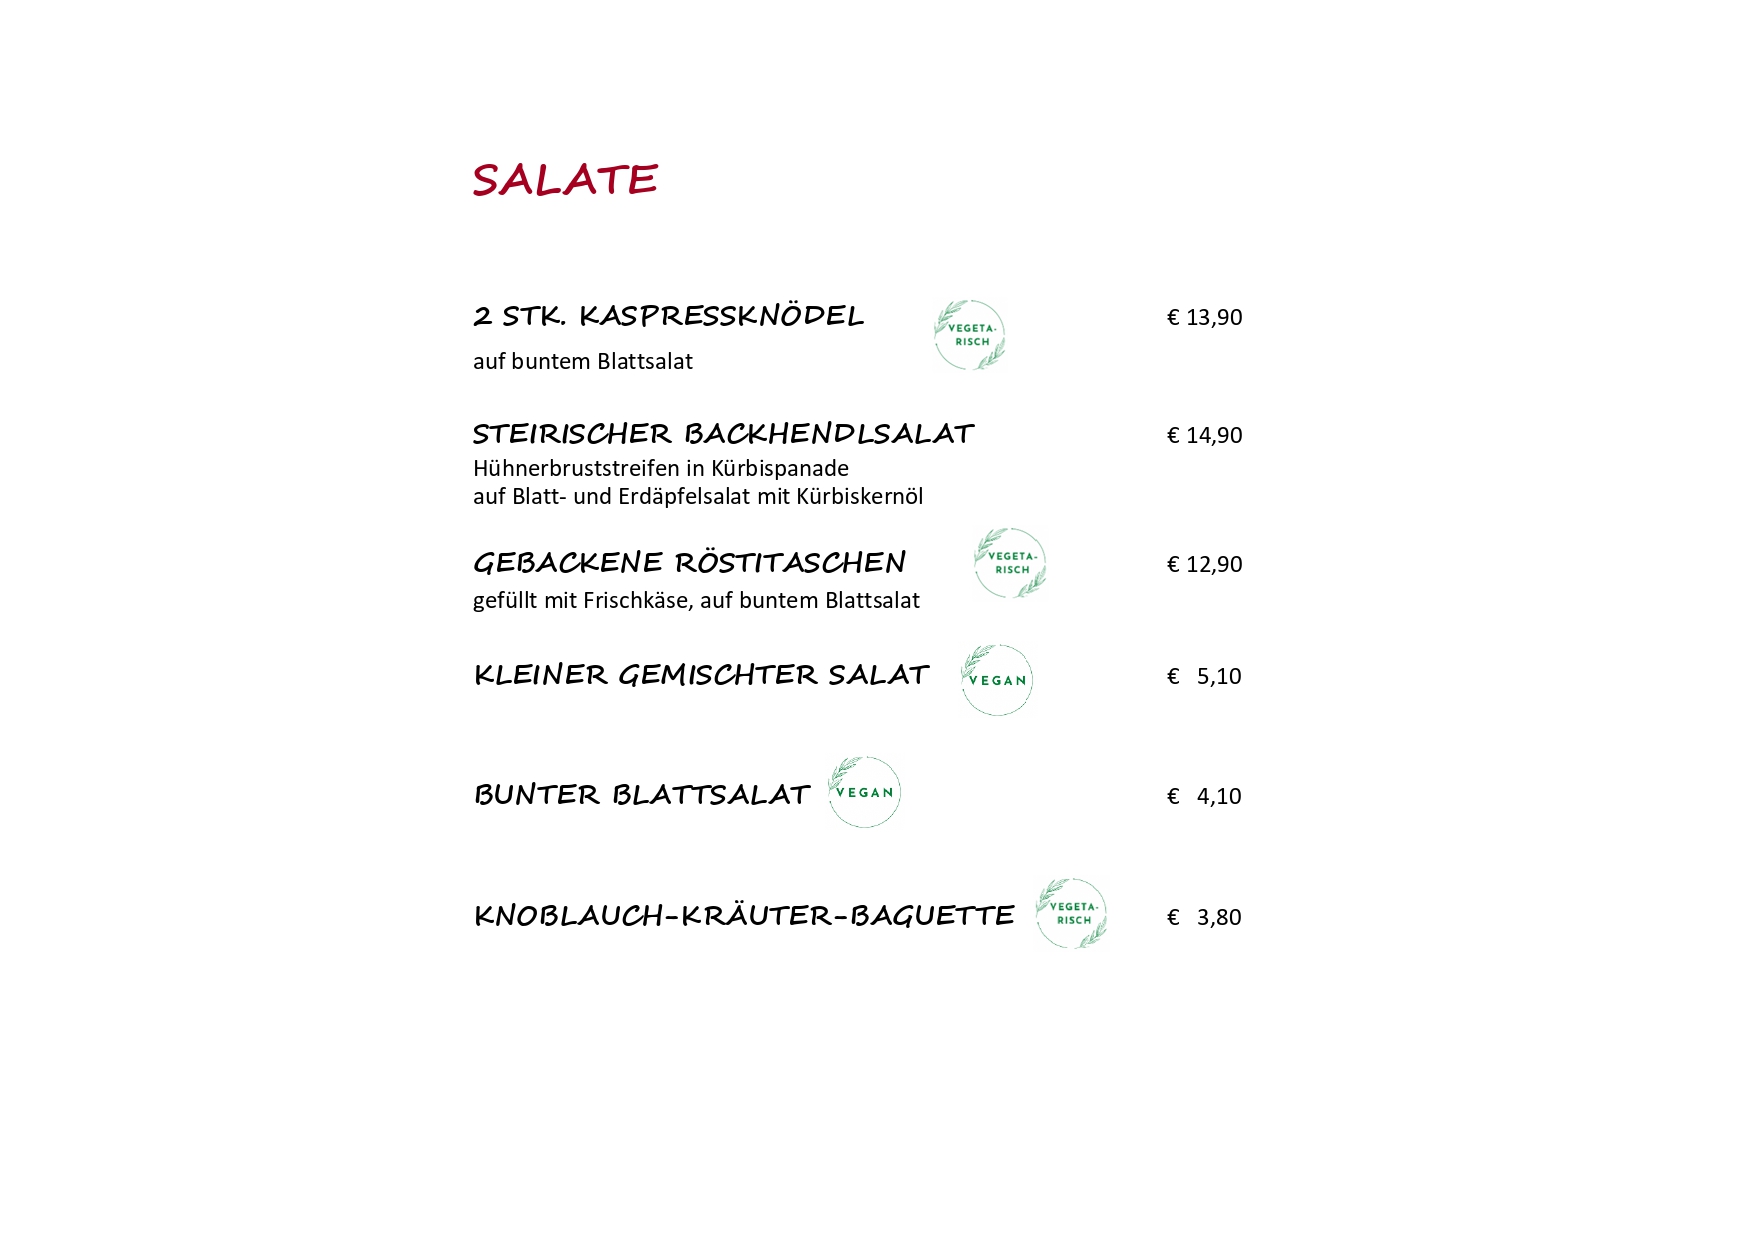 3_Salate (Tiroler Schmankerl)-converted_page-0001.jpg